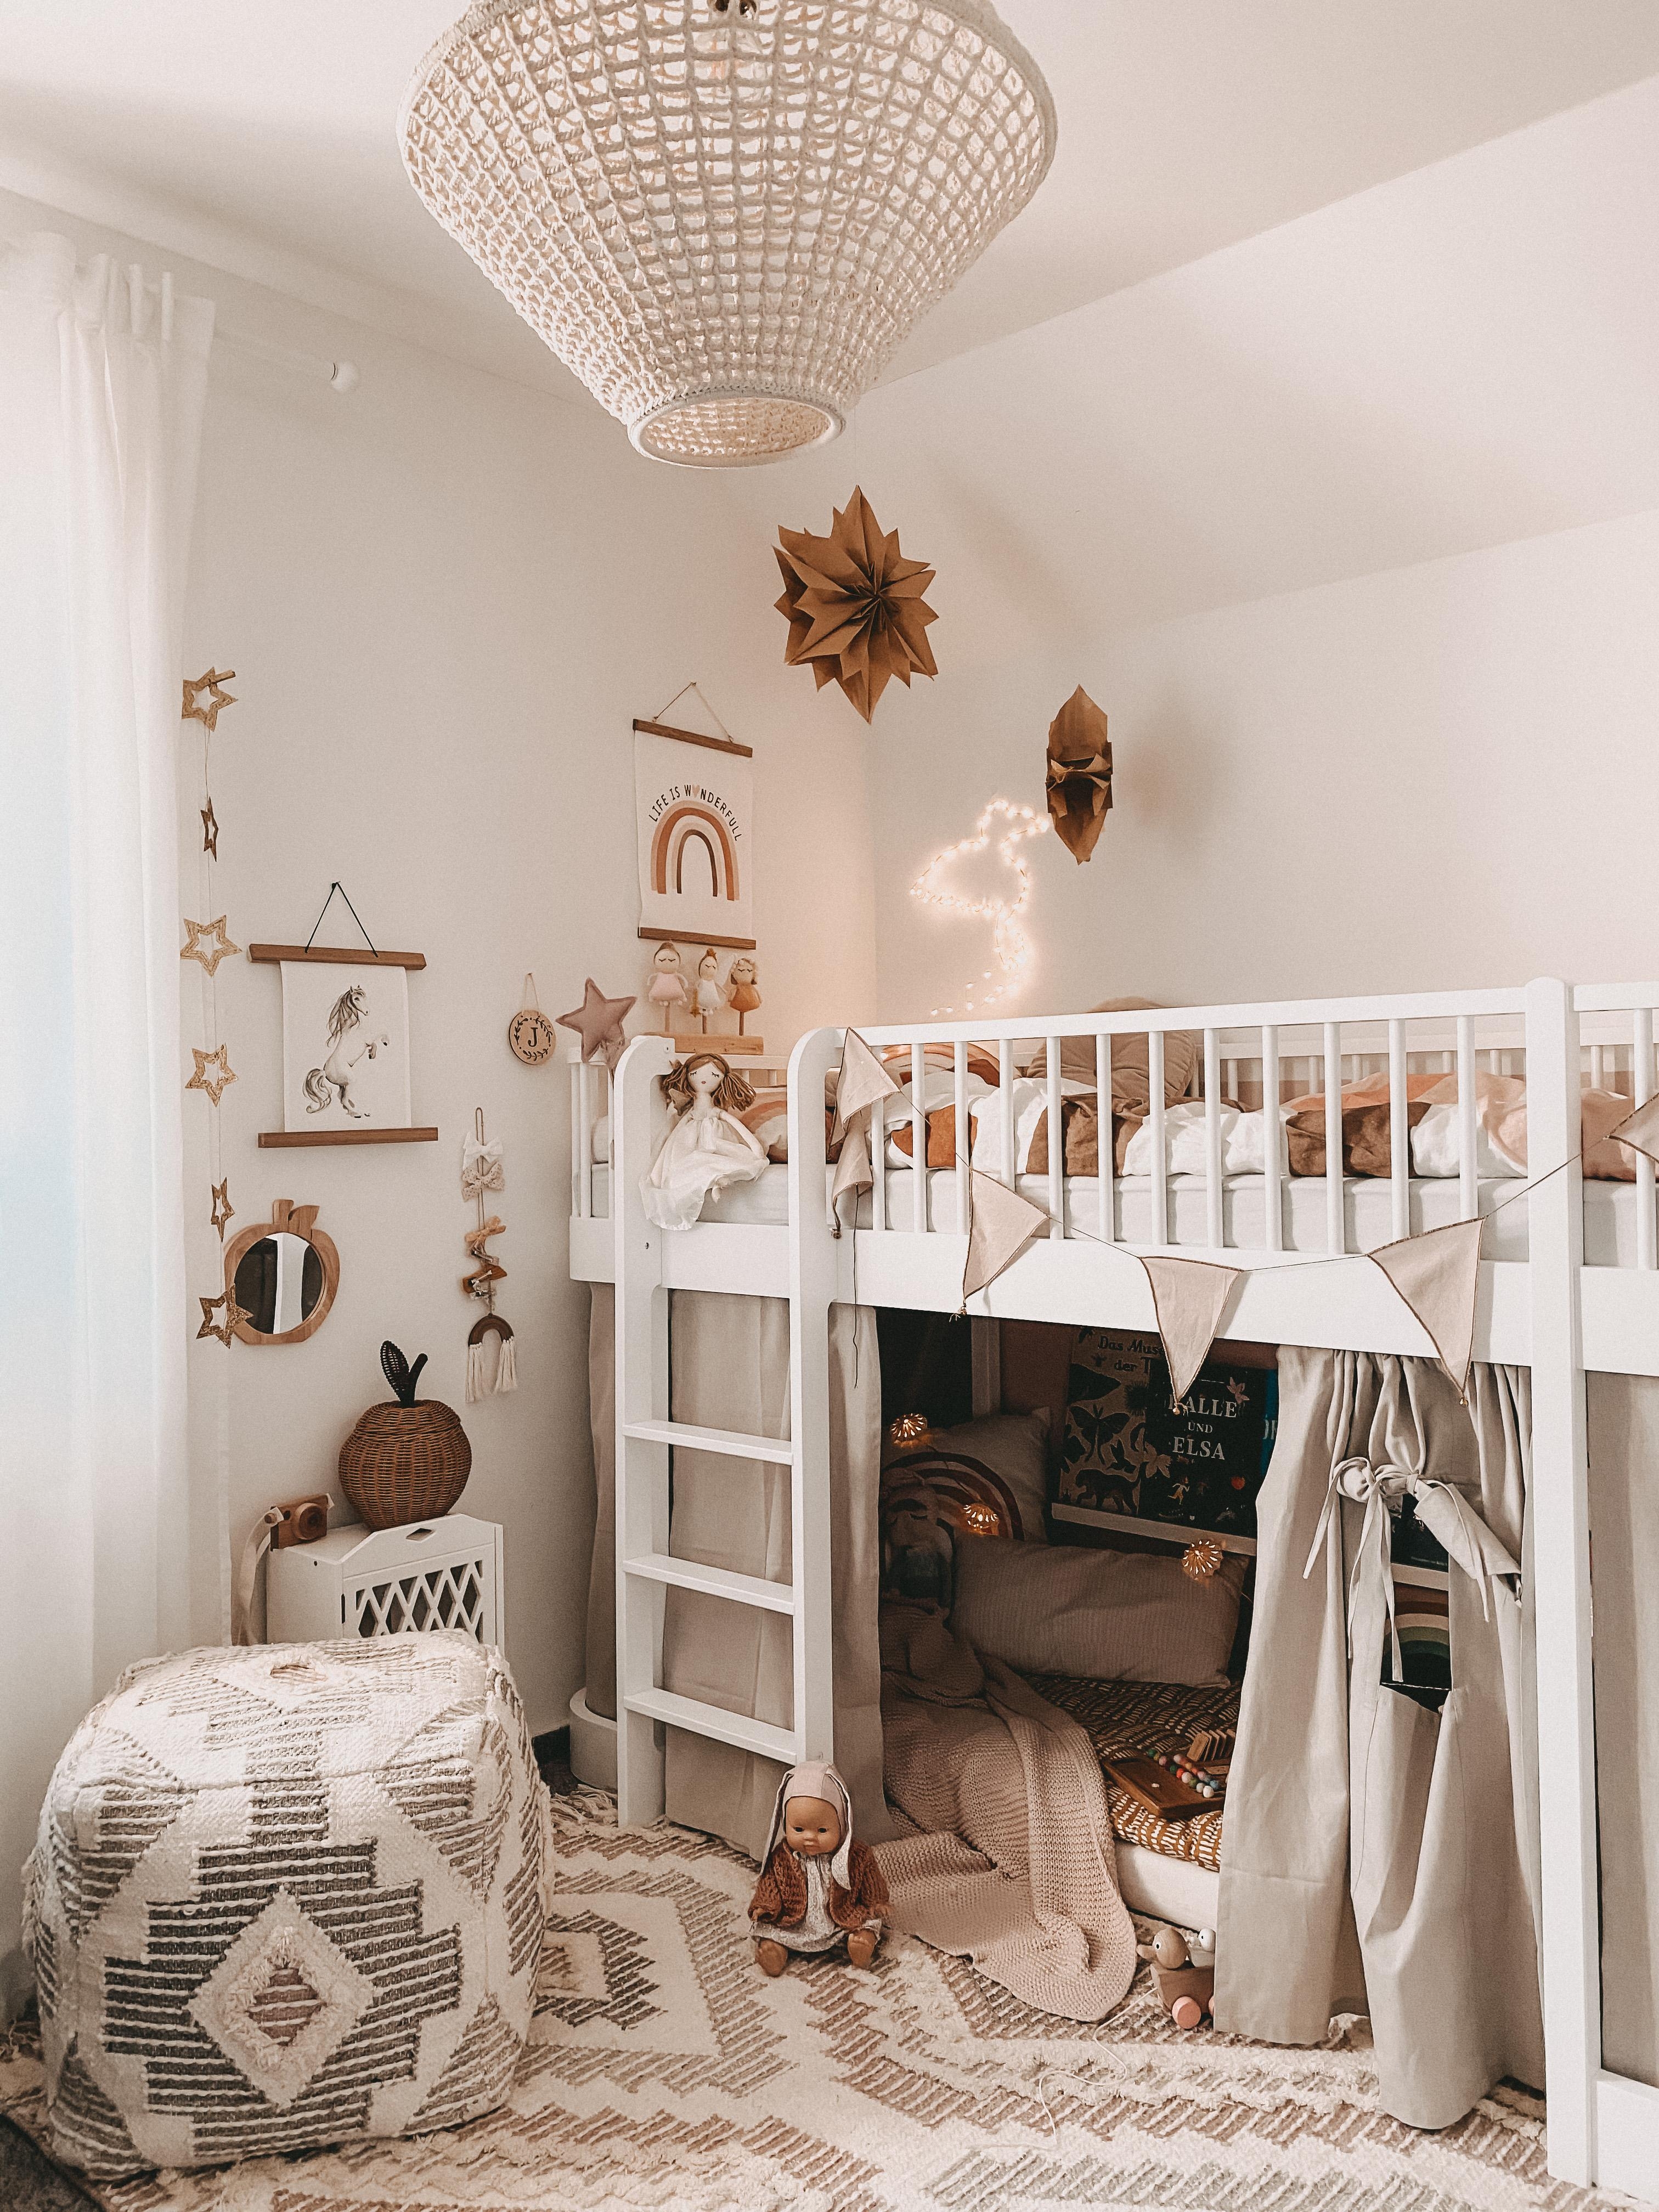 DIY - Sterne im Kinderzimmer ⭐️

#christmasdecor
#weihnachtsdeko
#kidsroom
#kinderzimmer
#DIYSterne